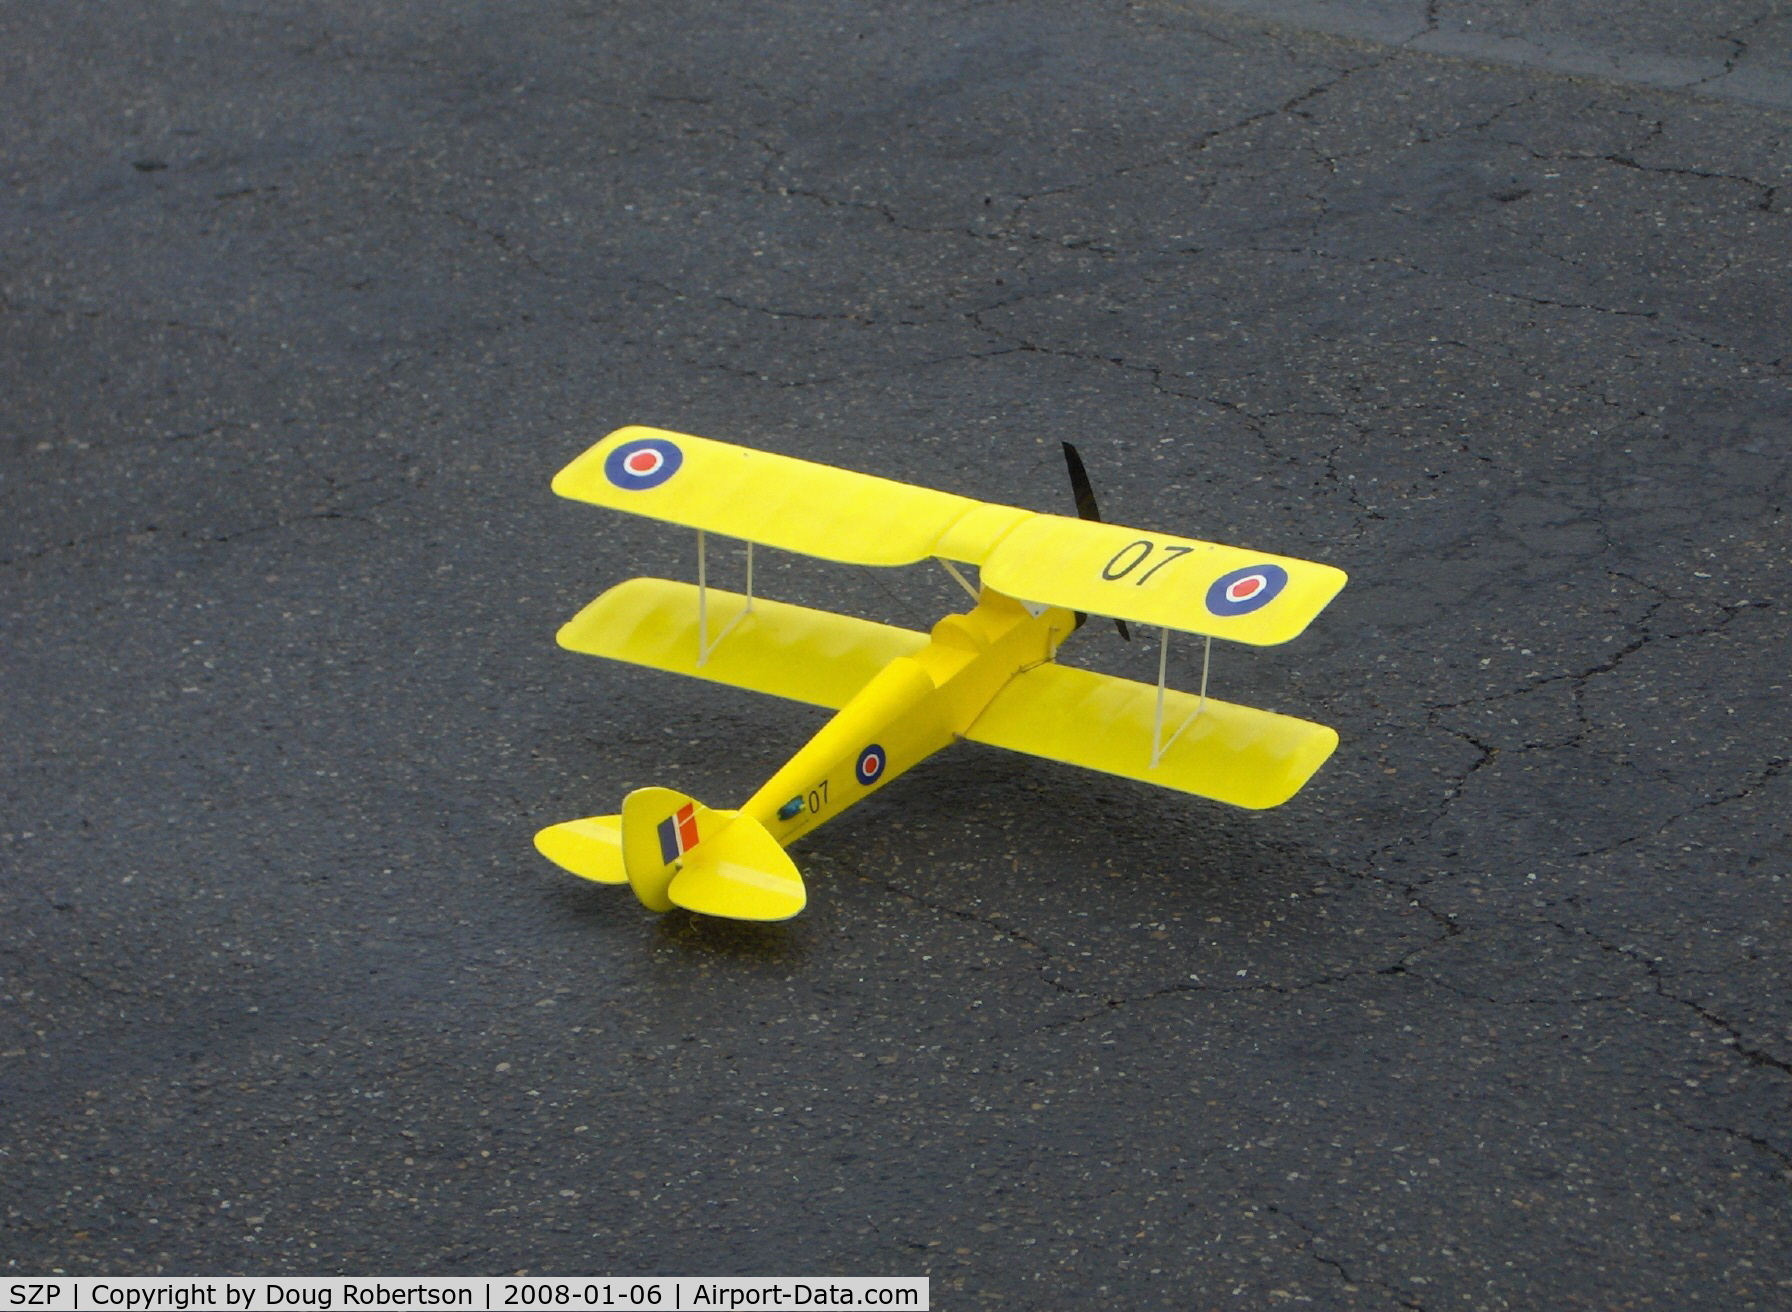 Santa Paula Airport (SZP) - Rick's Tiger Moth RC drone on the deck